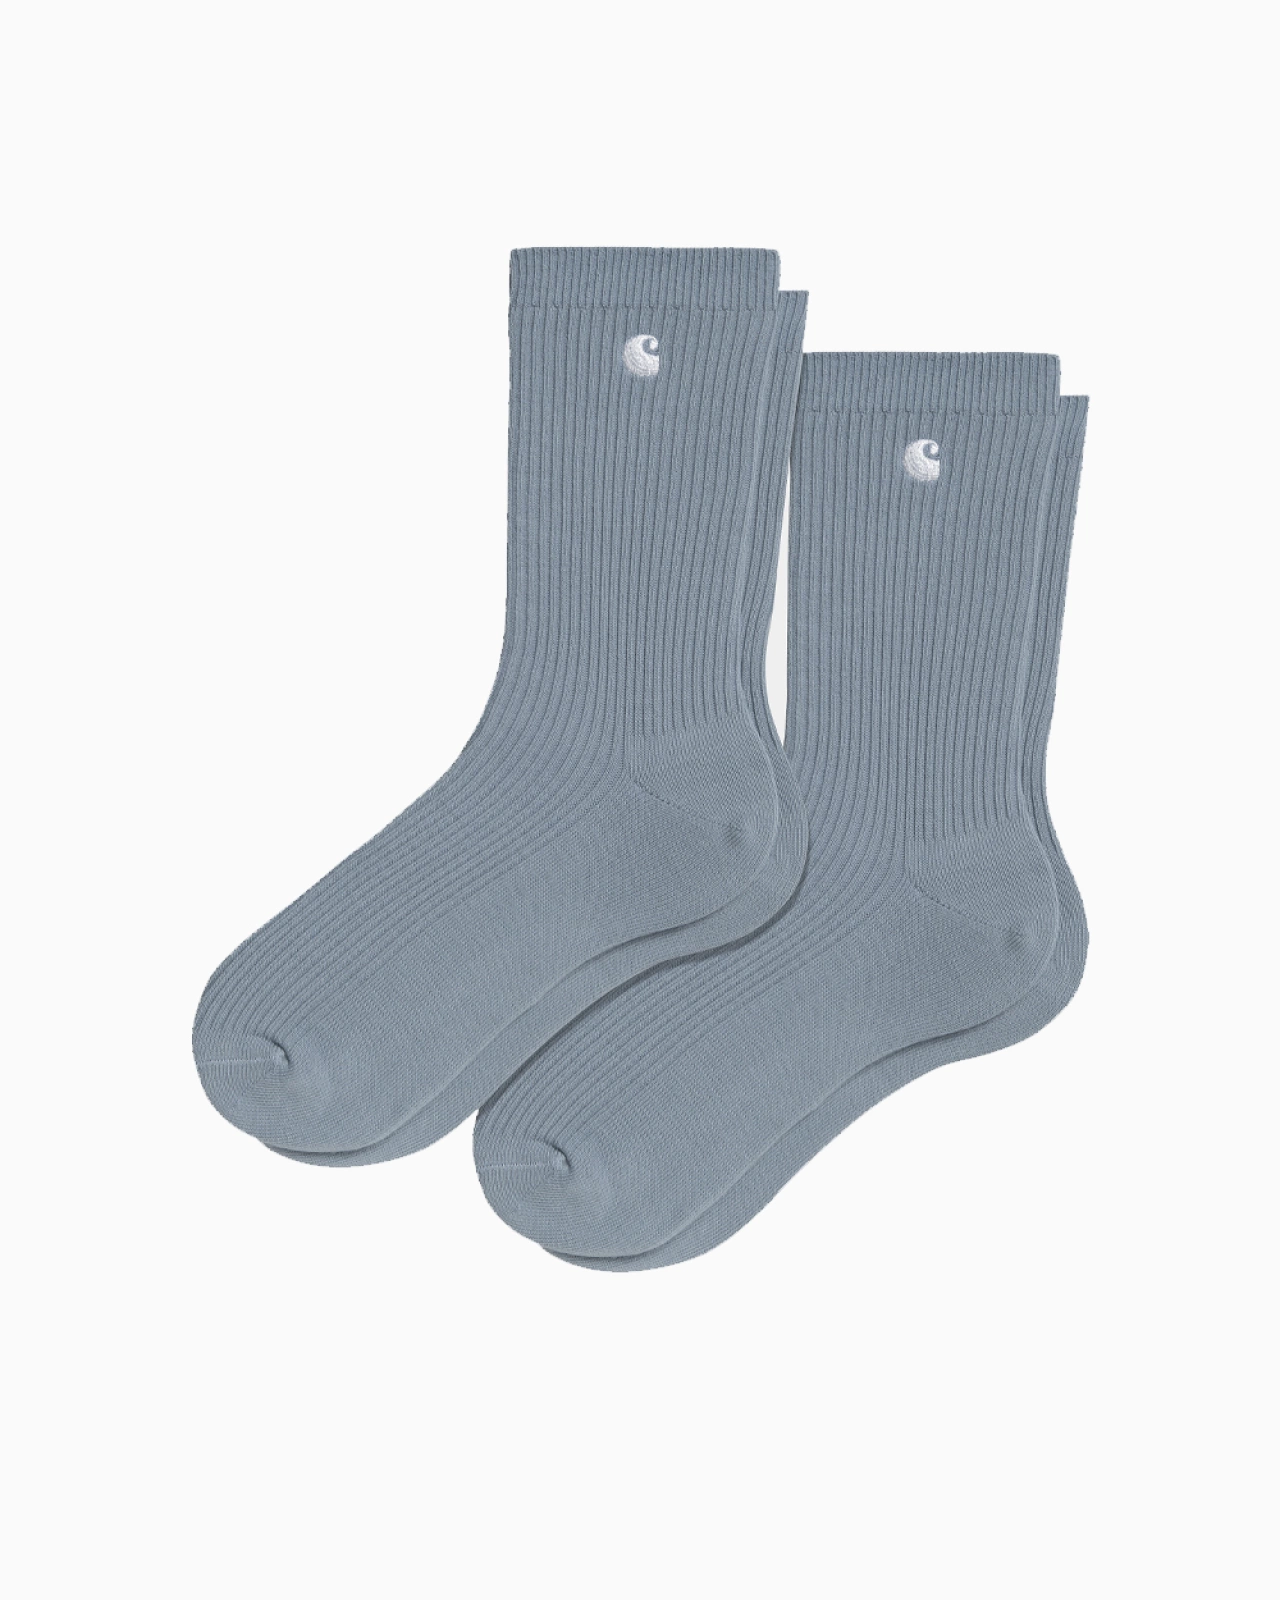 Carhartt Wip: Носки 2шт. Carhartt WIP Madison Pack Socks 